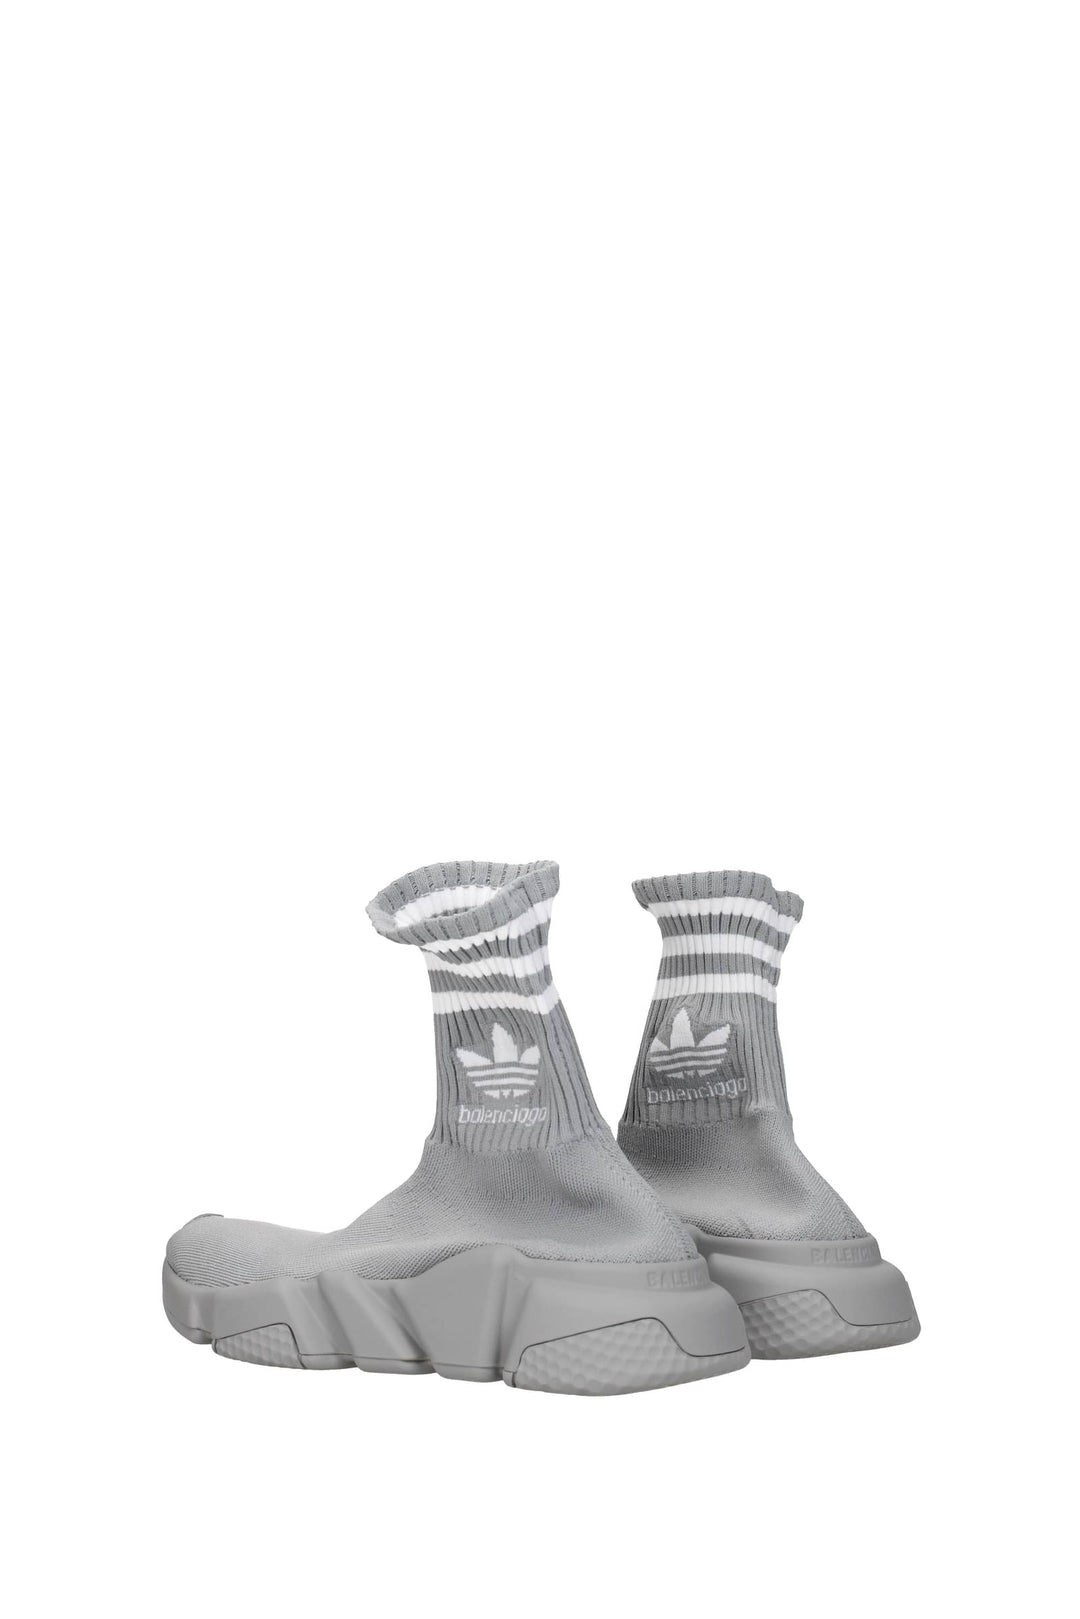 Sneakers Adidas Speed Tessuto Grigio Bianco - Balenciaga - Donna